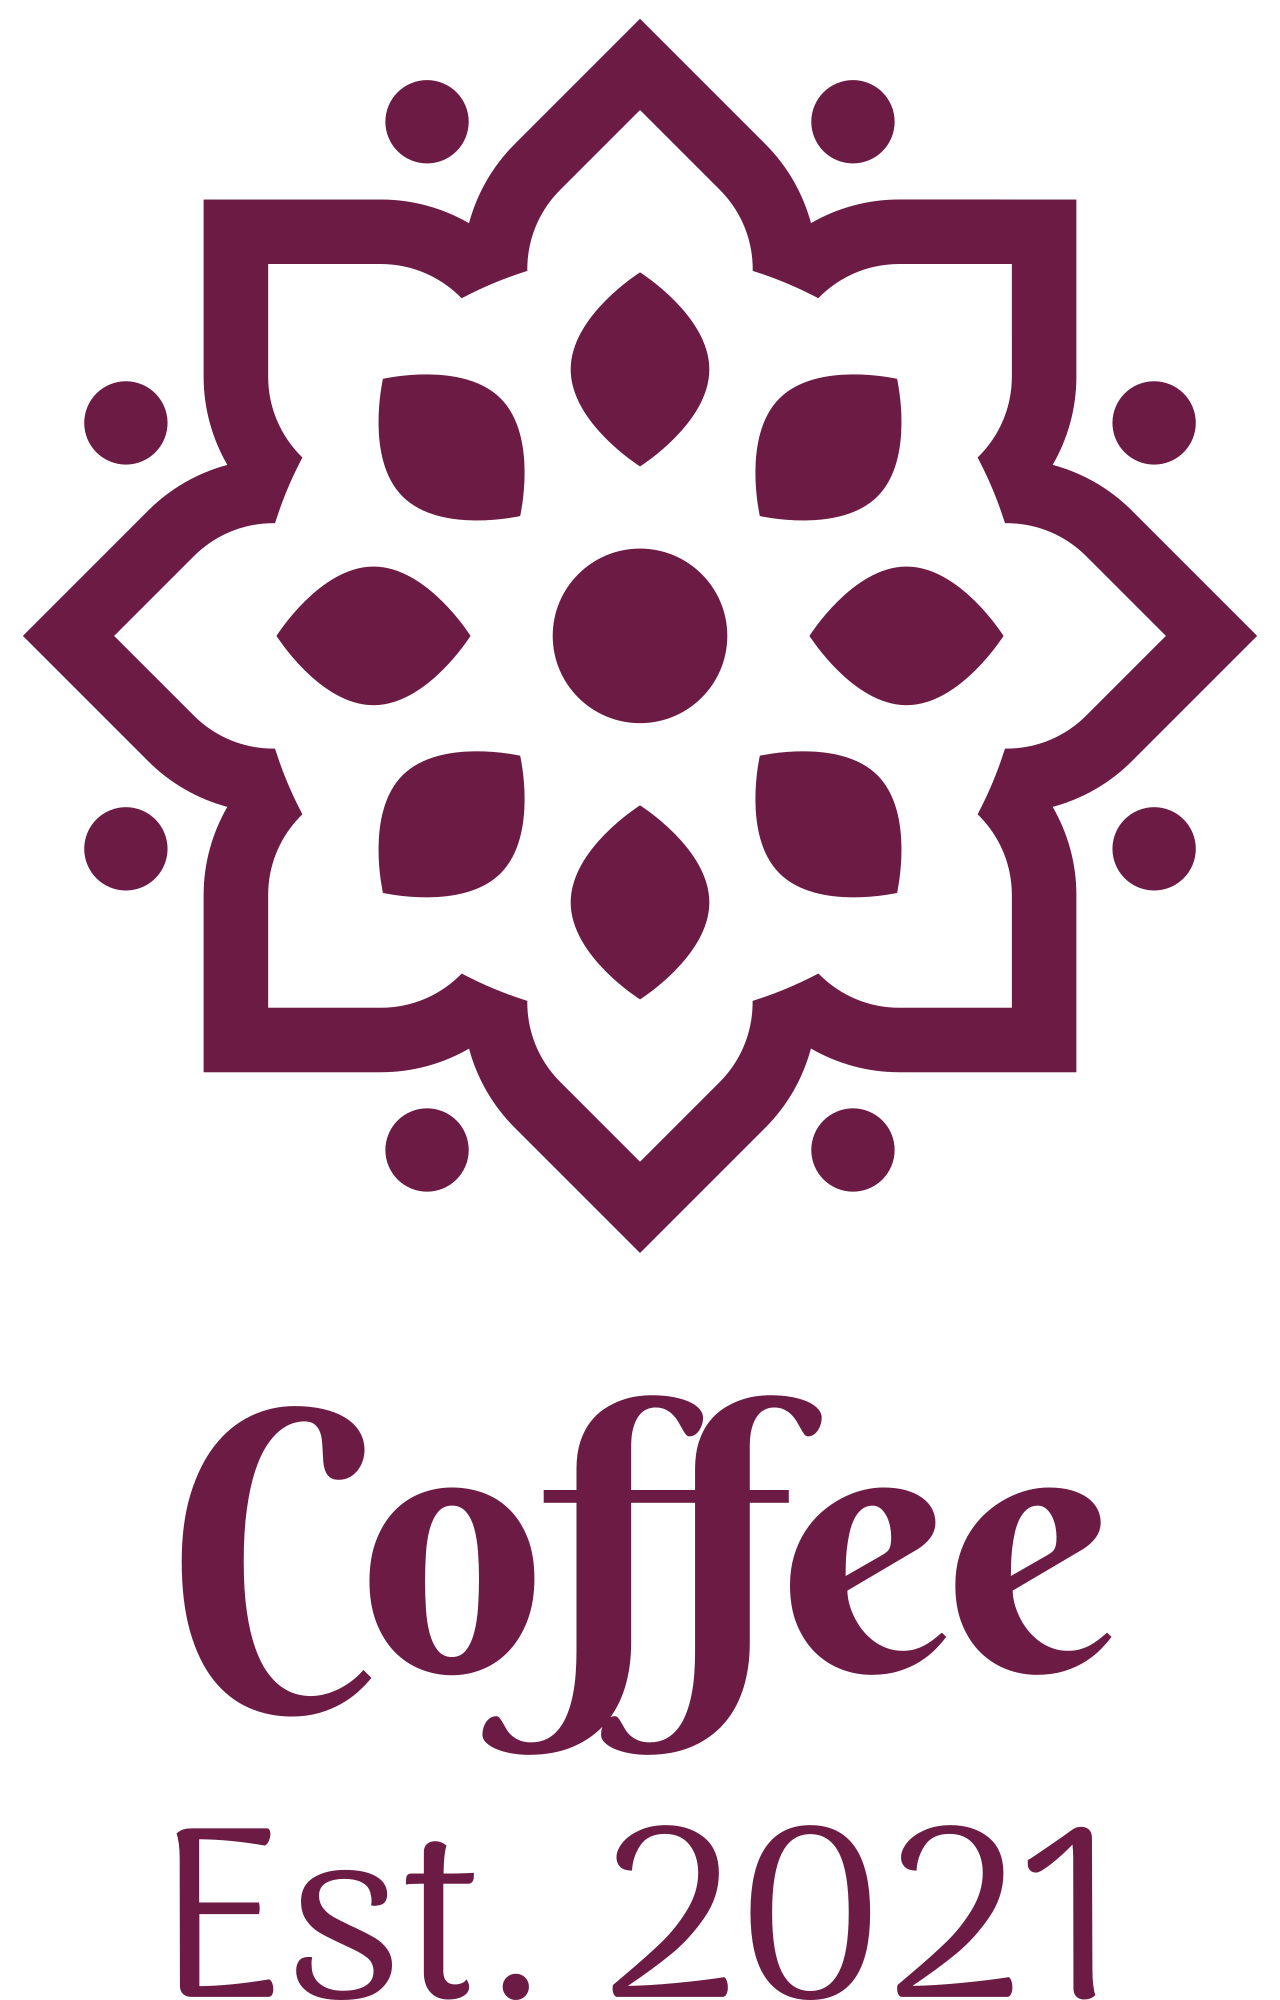 Coffee's web page